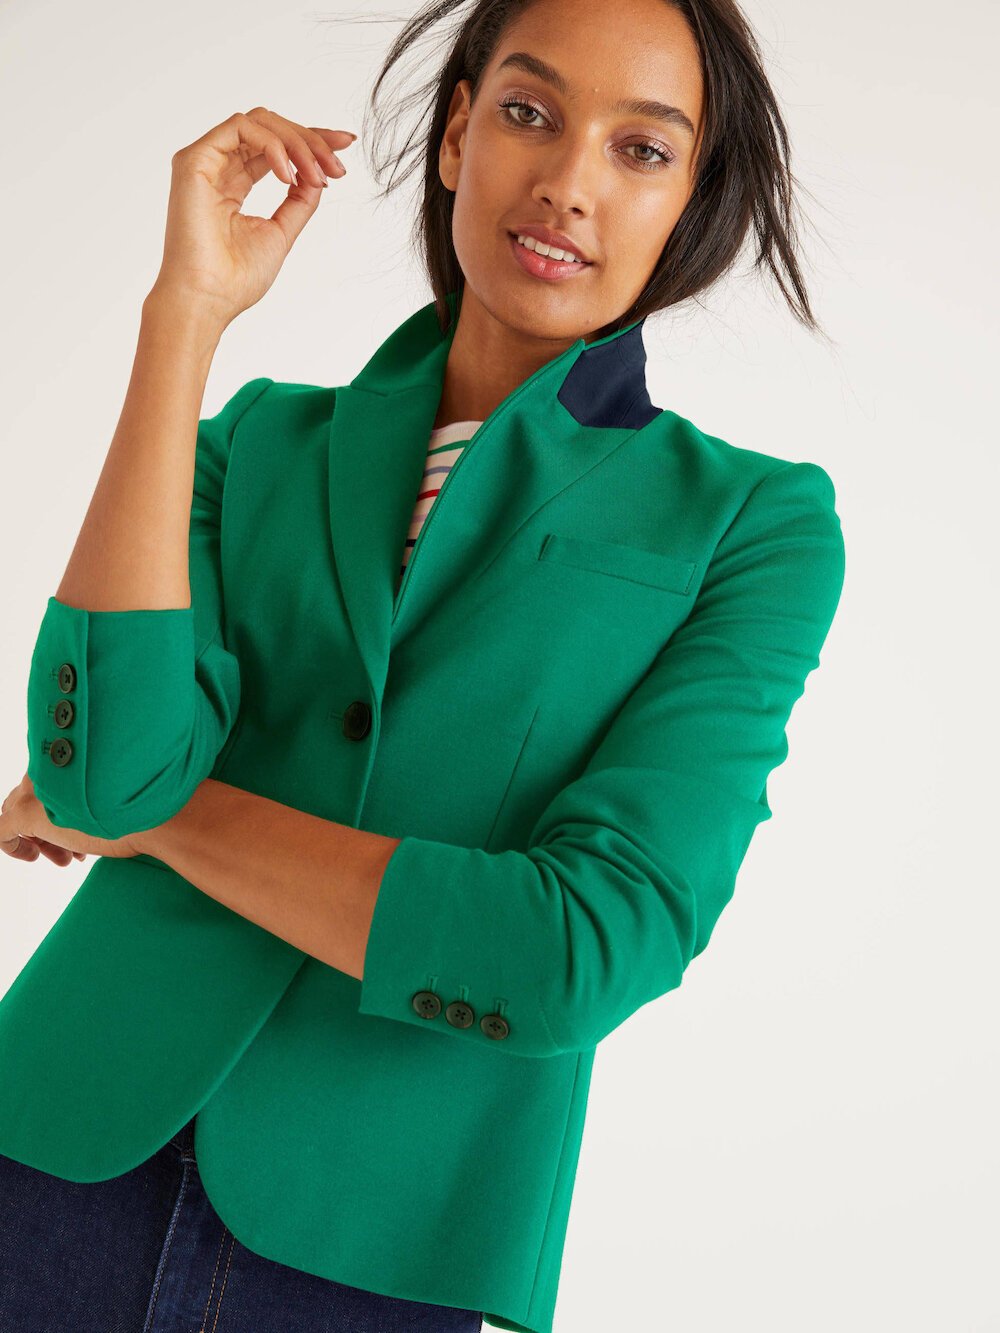 what-to-wear-to-an-interview-boden-green-blazer.jpg